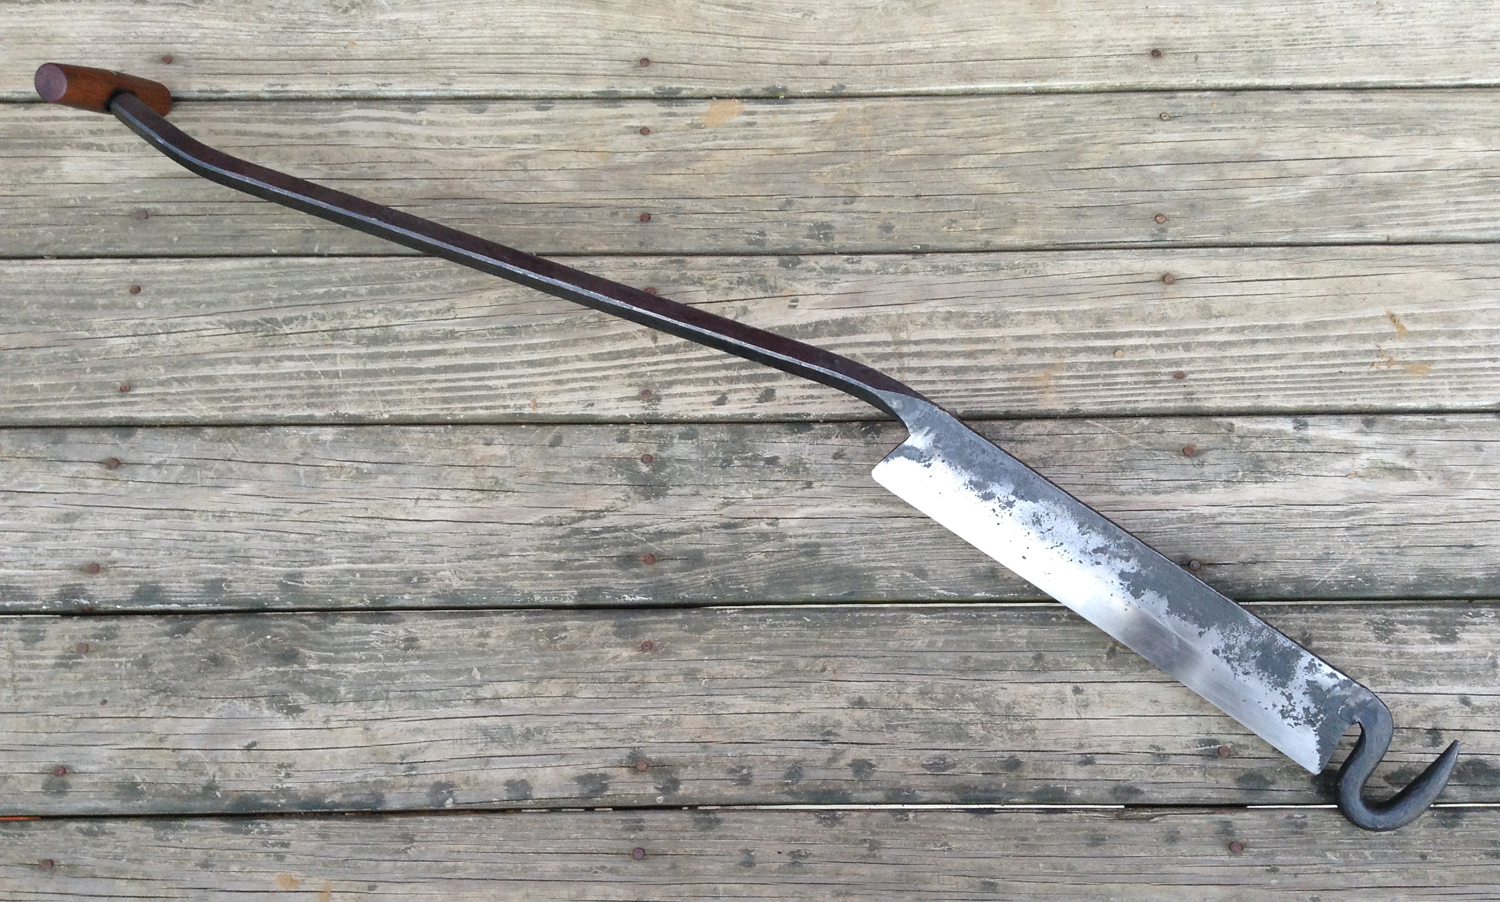  clog-maker's knife, steel, tool steel, 2014 